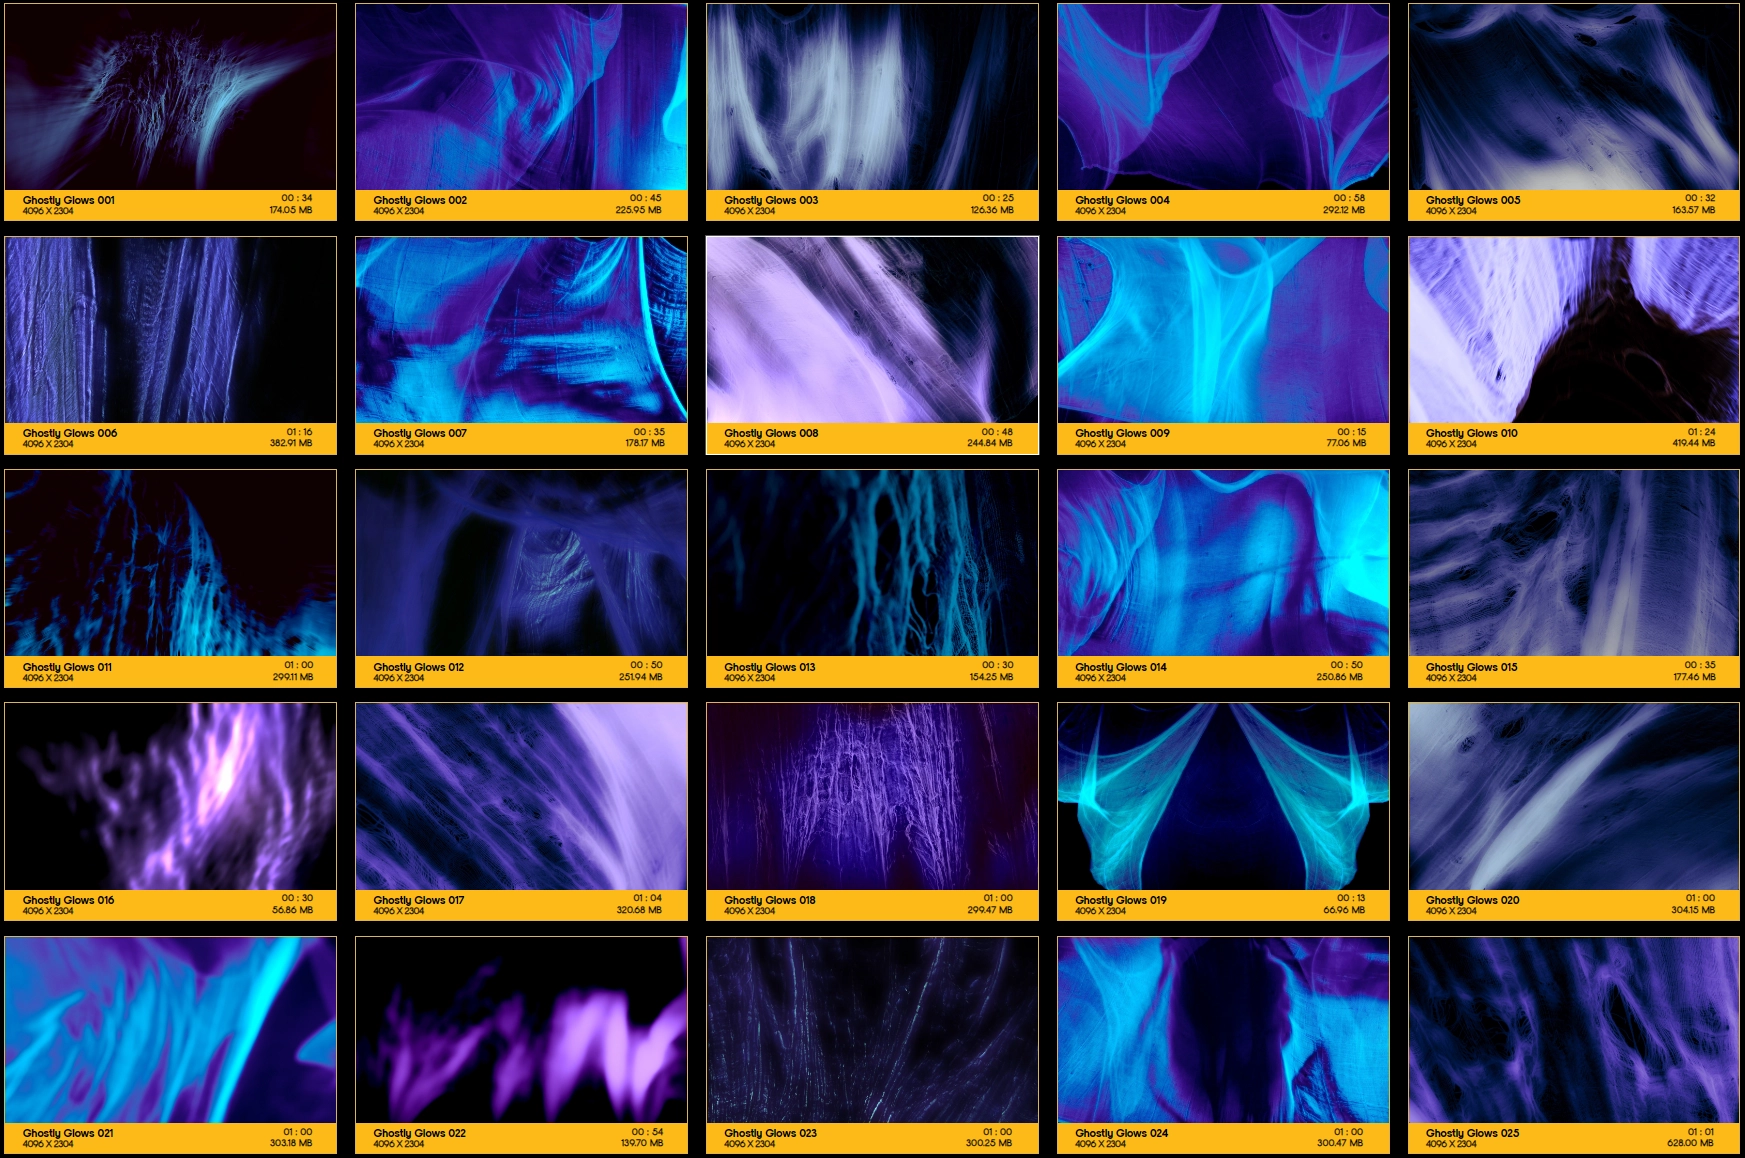 4K视频素材-61种惊悚恐怖氛围丝绸纱布漂浮移动特效合成素材 BBV57 Ghostly Glows精品推荐、视频素材